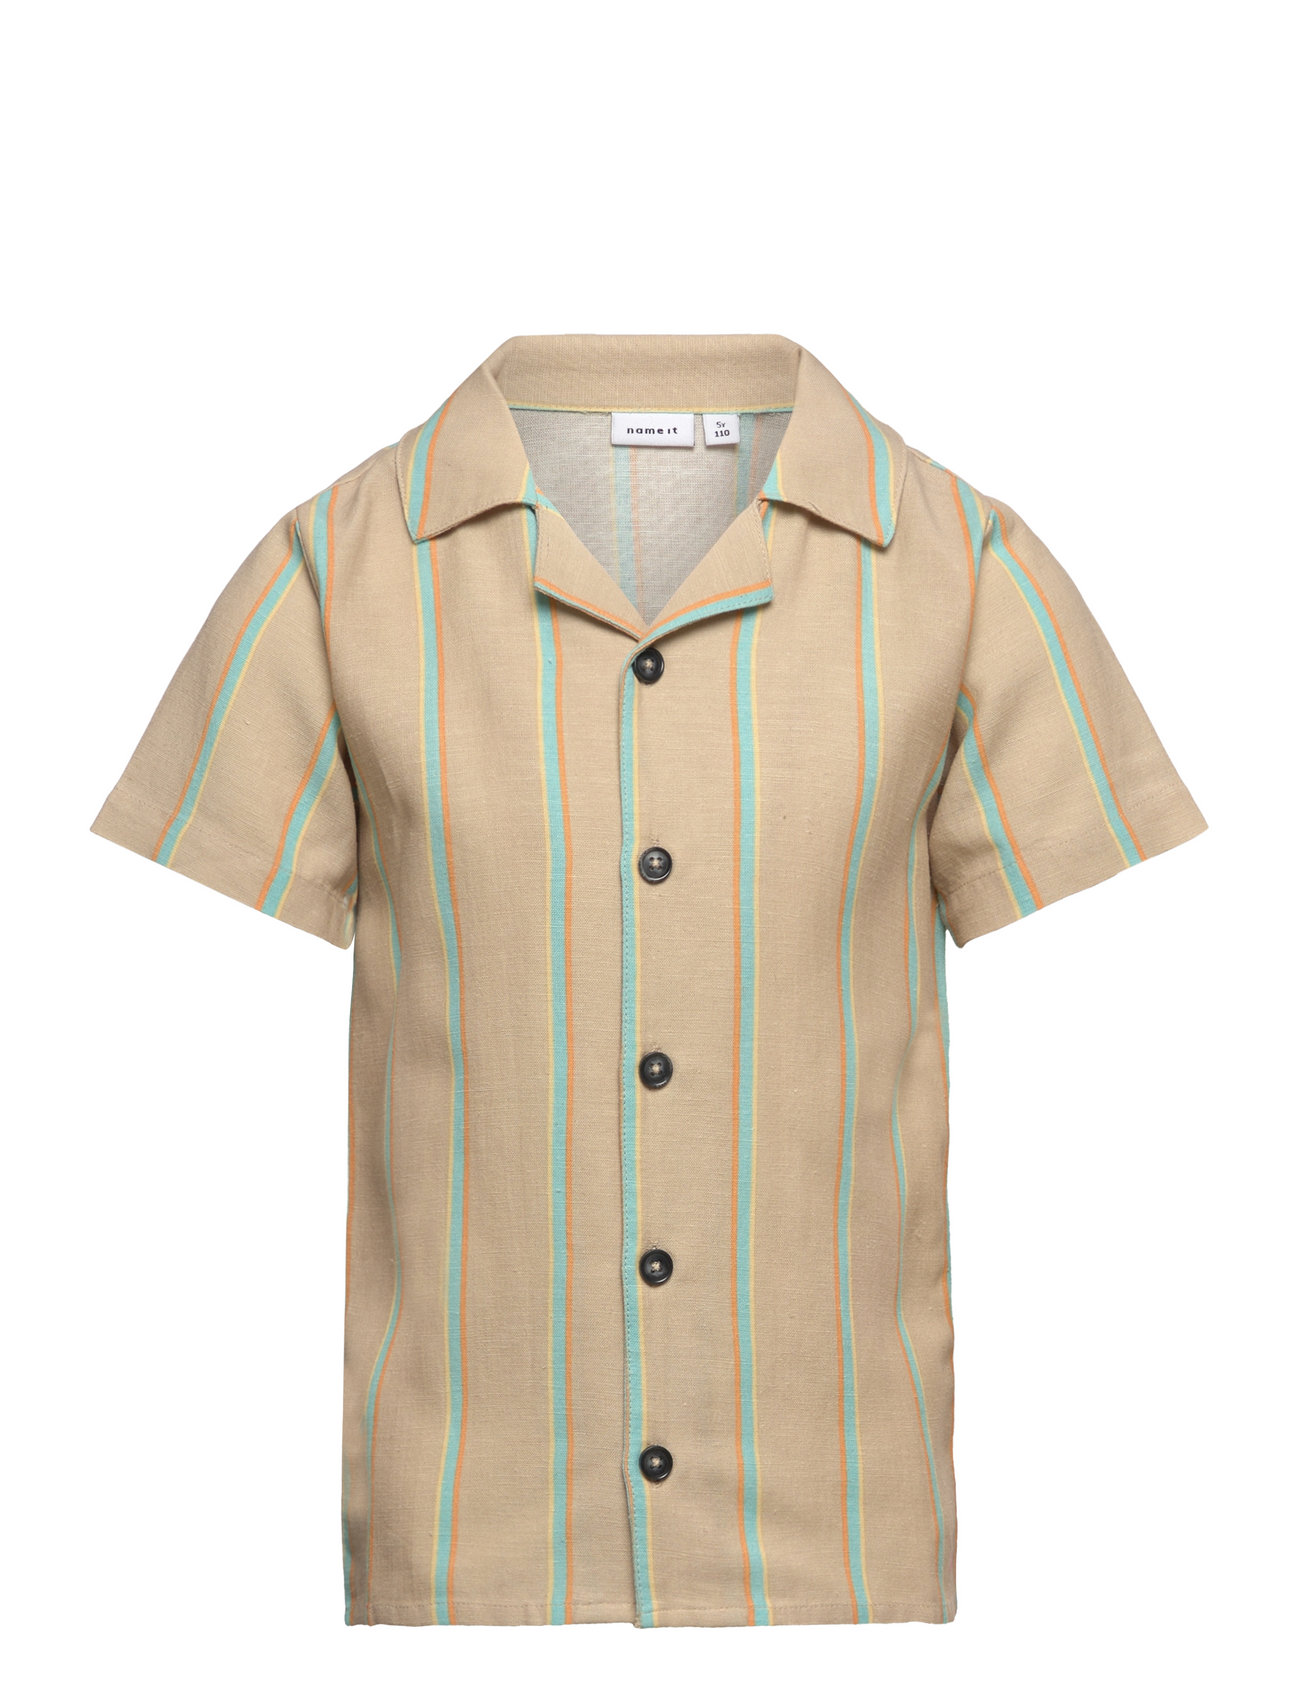 Nmmhesimon Ss Shirt Tops Shirts Short-sleeved Shirts Multi/patterned Name It